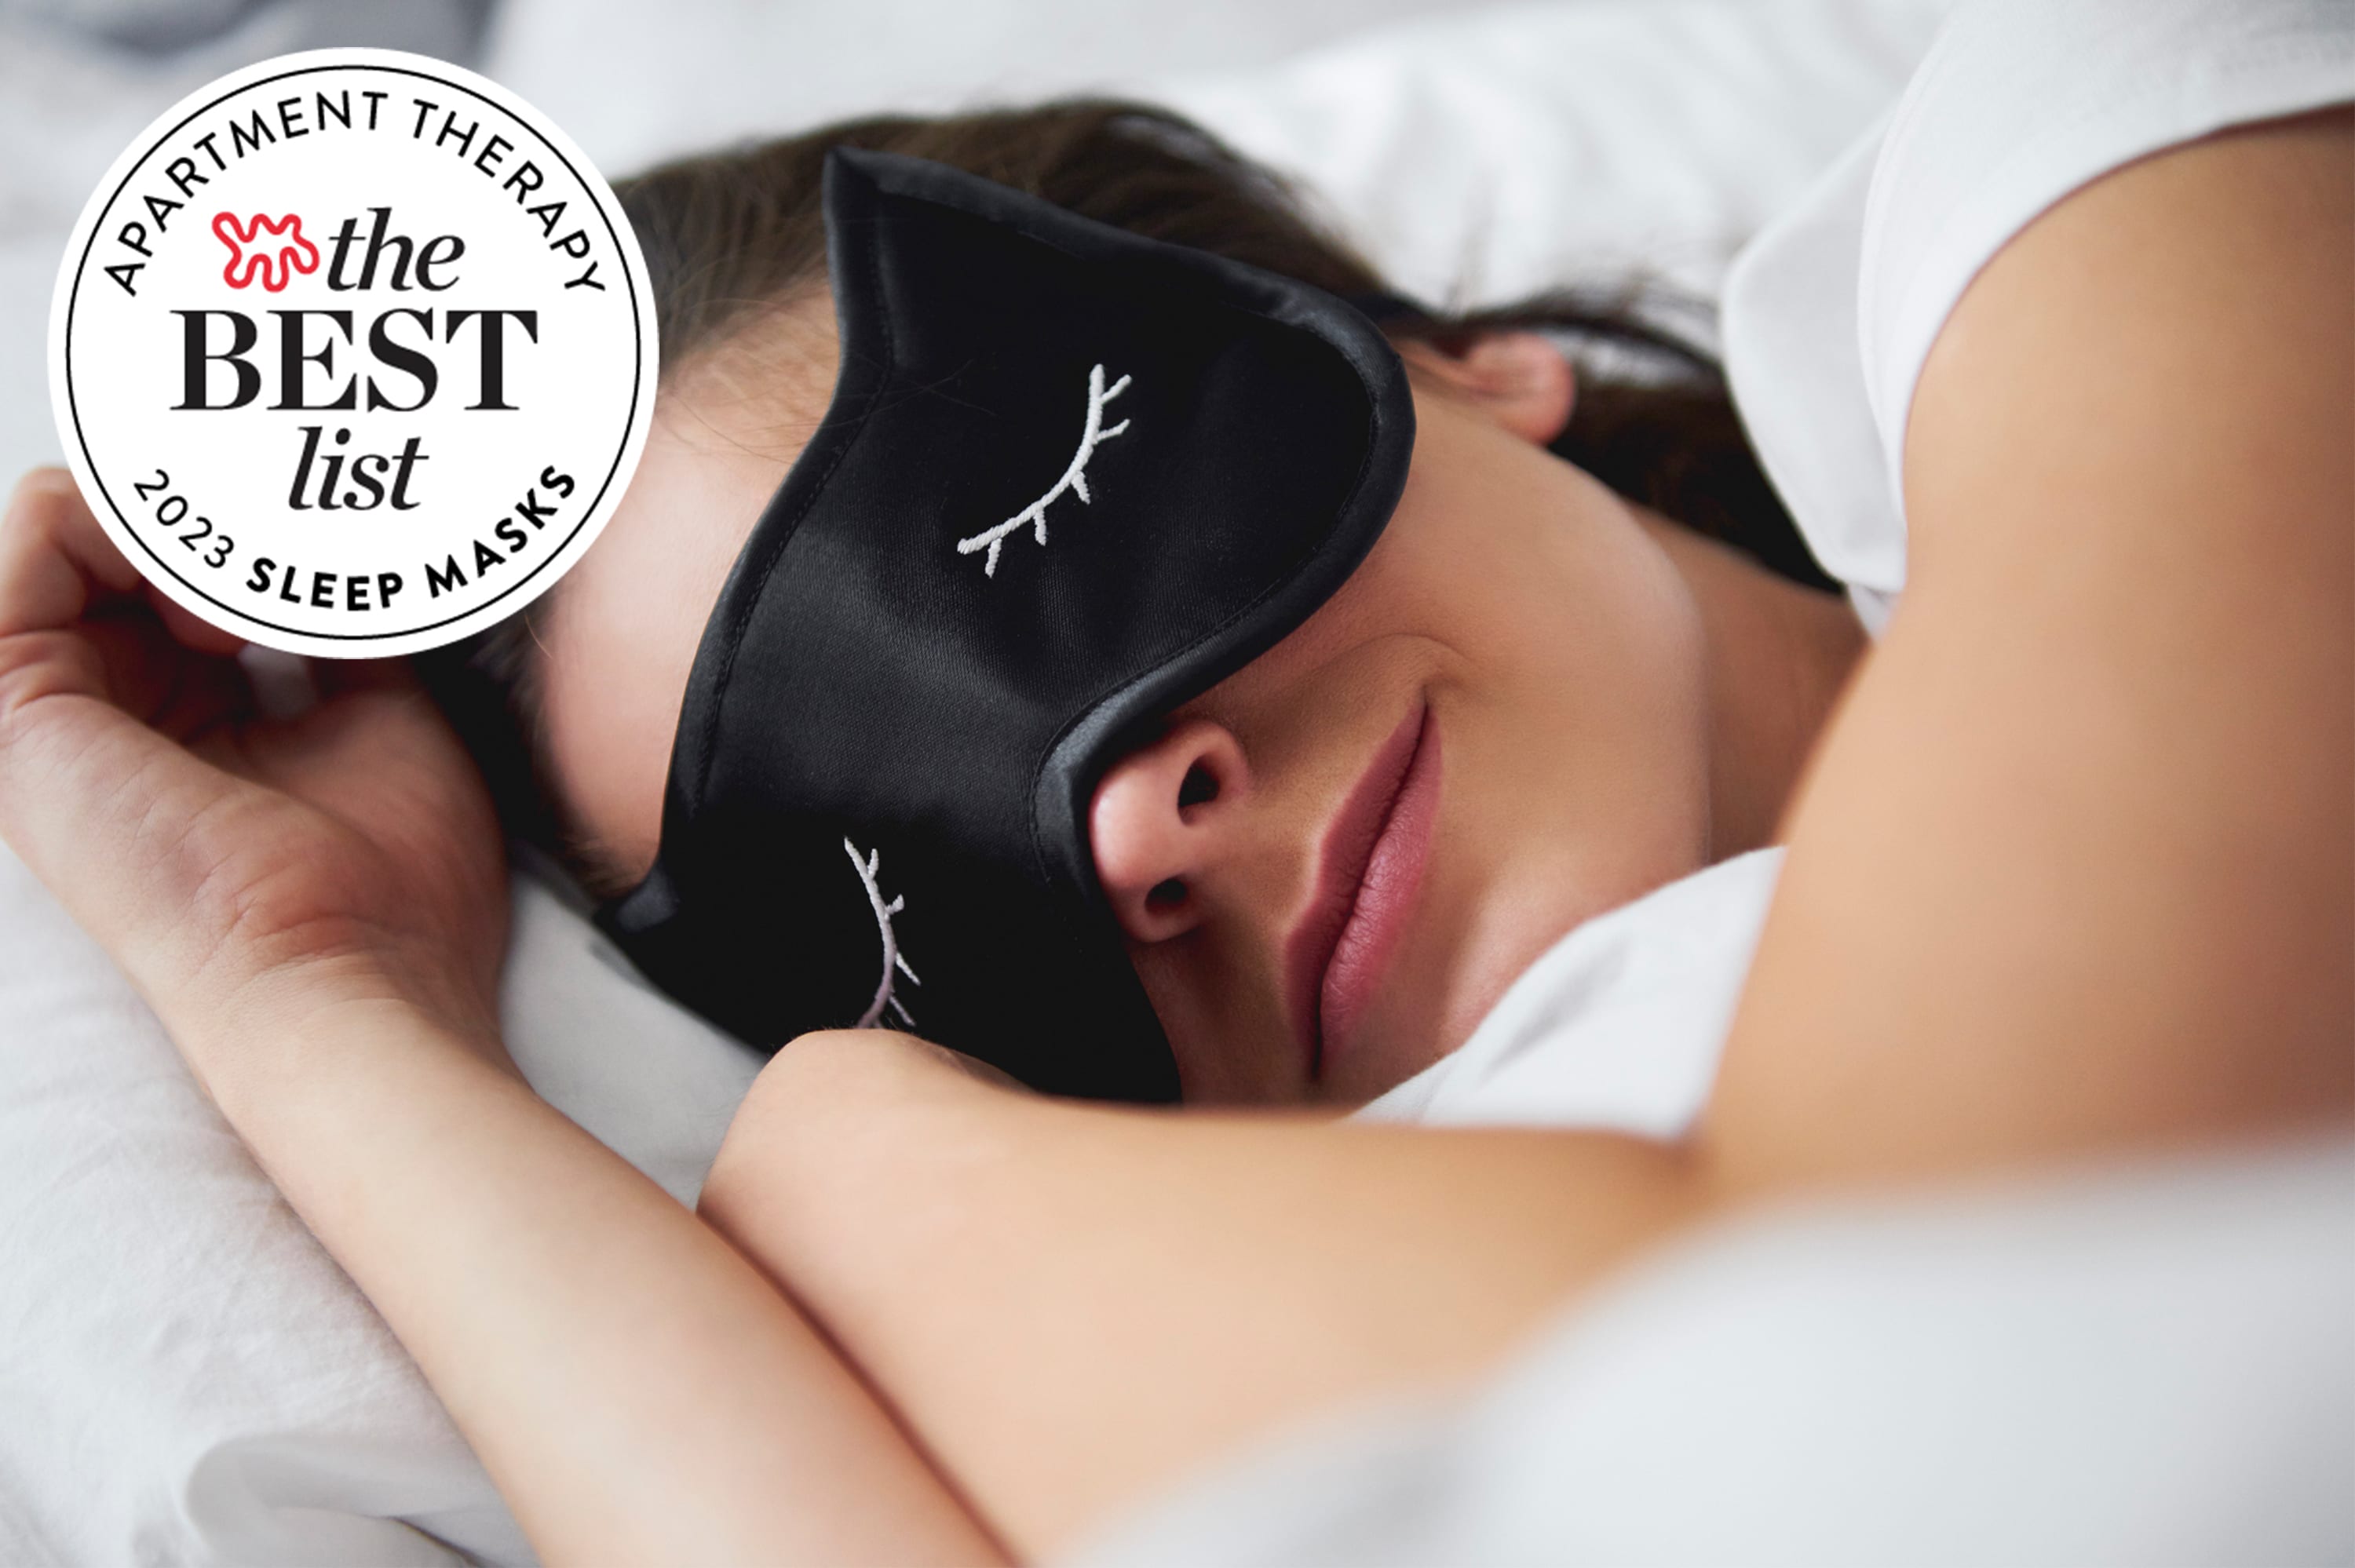 Silk Sleep Mask, Lightweight and Comfortable, Super Soft, Adjustable  Contoured Eye Mask for Sleeping, Shift Work, Naps, Best Night Blindfold  Eyeshade